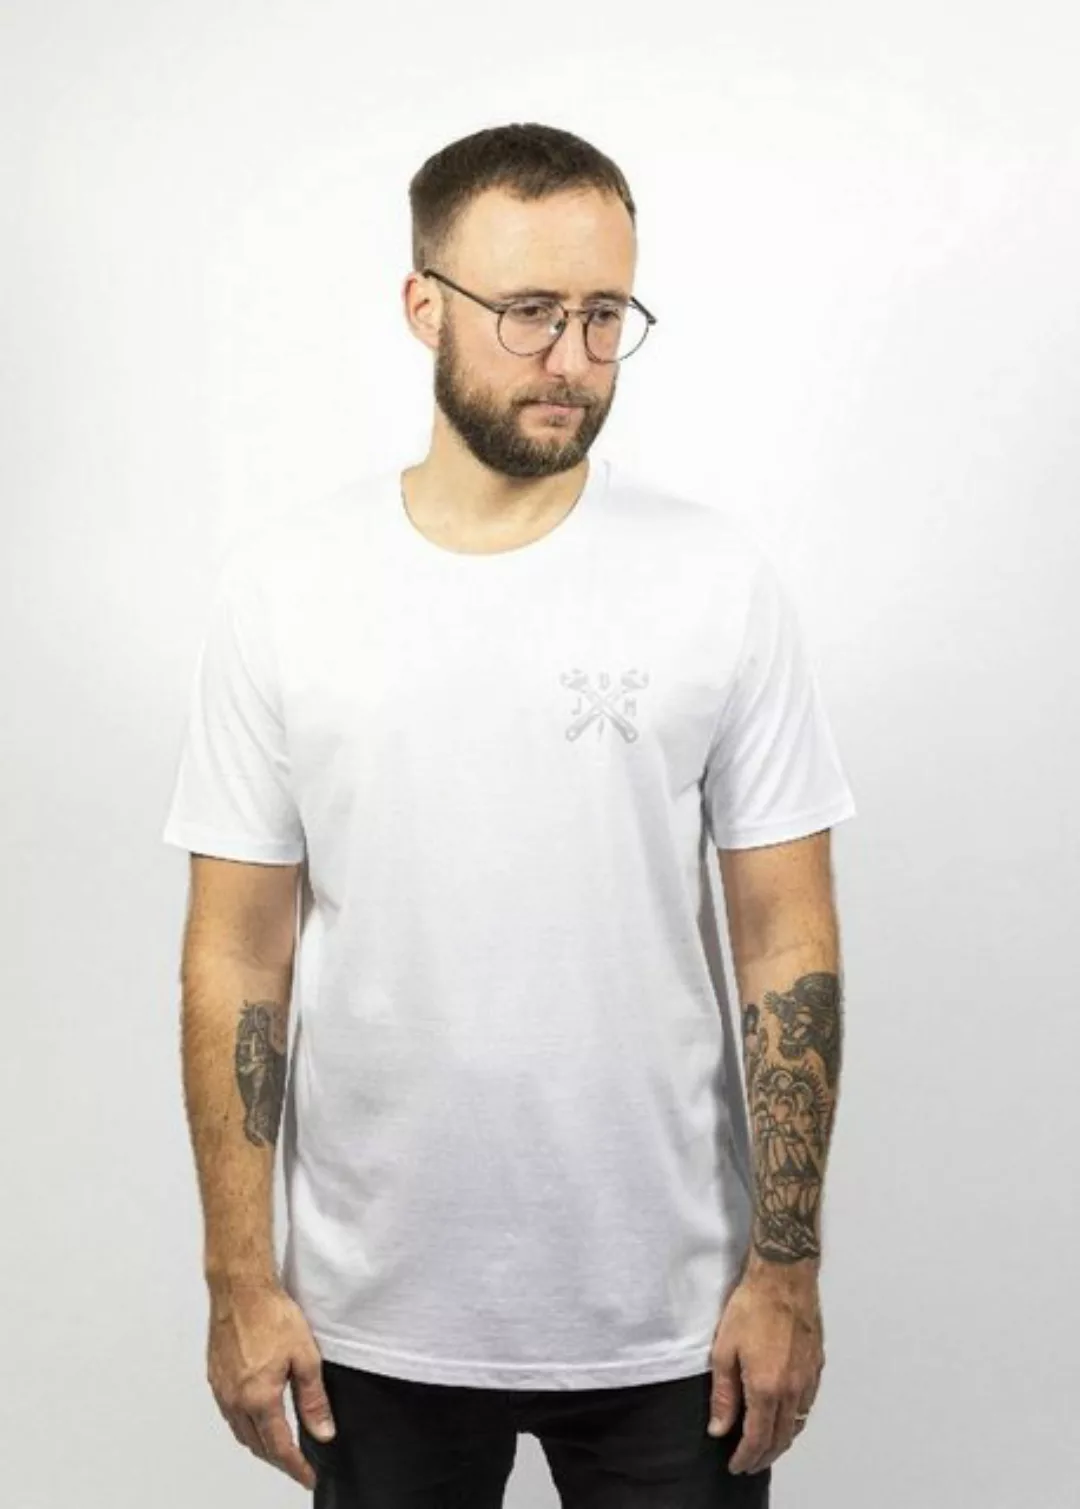 John Doe T-Shirt günstig online kaufen